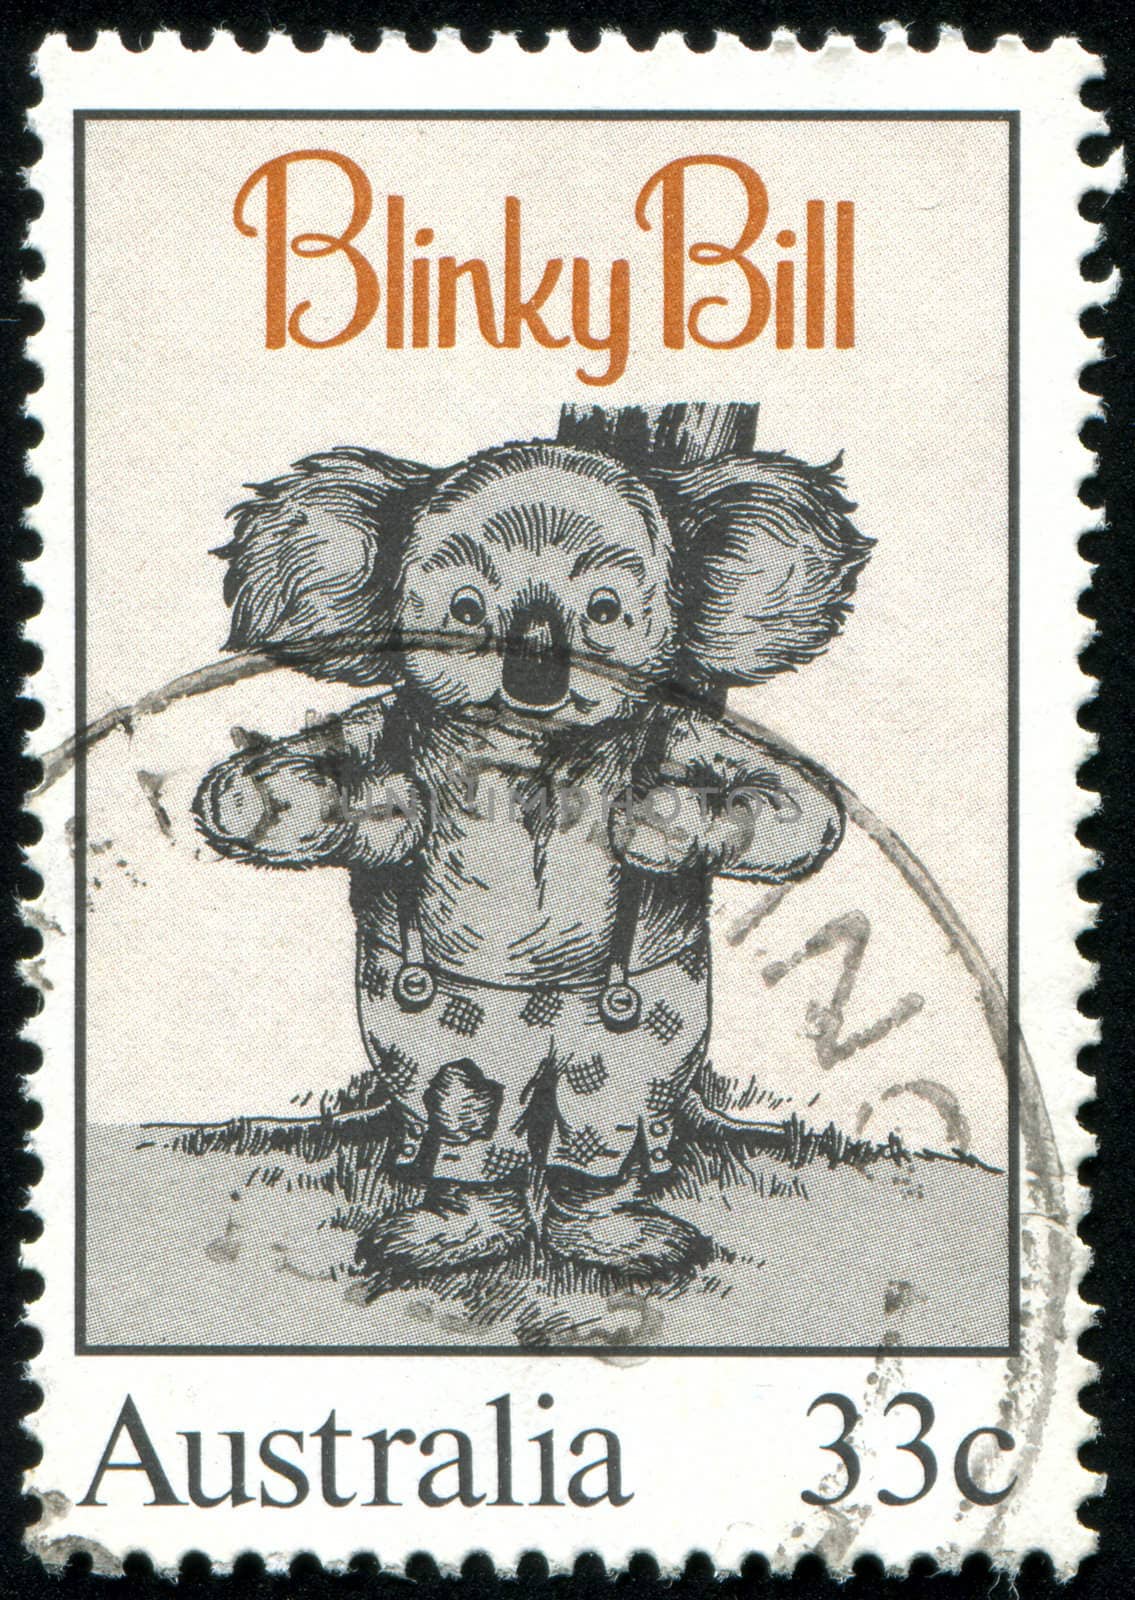 AUSTRALIA - CIRCA 1985: stamp printed by Australia, shows Blinky Bill, by Dorothy Wall, circa 1985